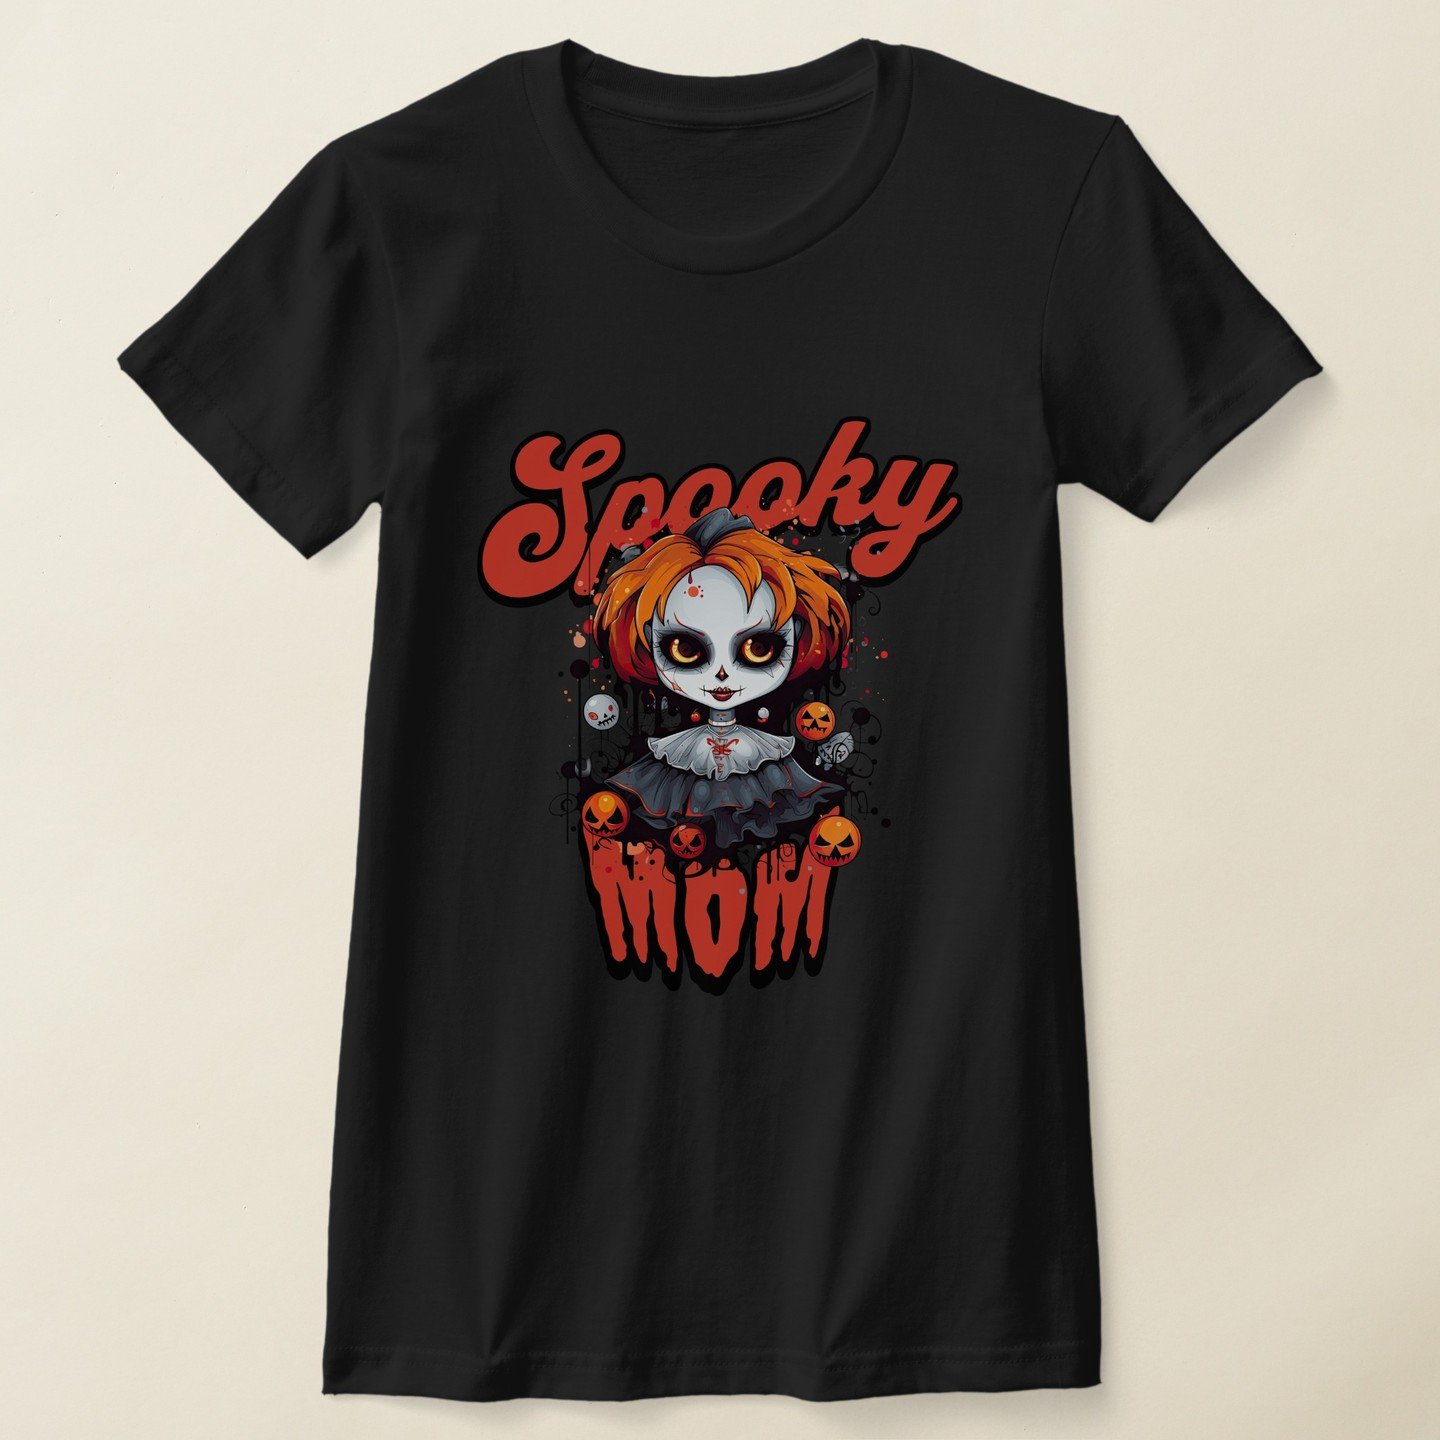 For the special all-year Halloween Spooky Mom #linkinbio
.
#zazzle #redbubble #teepublic #zazzlemade #shirt #stickers #mugs #mothersday #formom #halloweenmom #spookymom